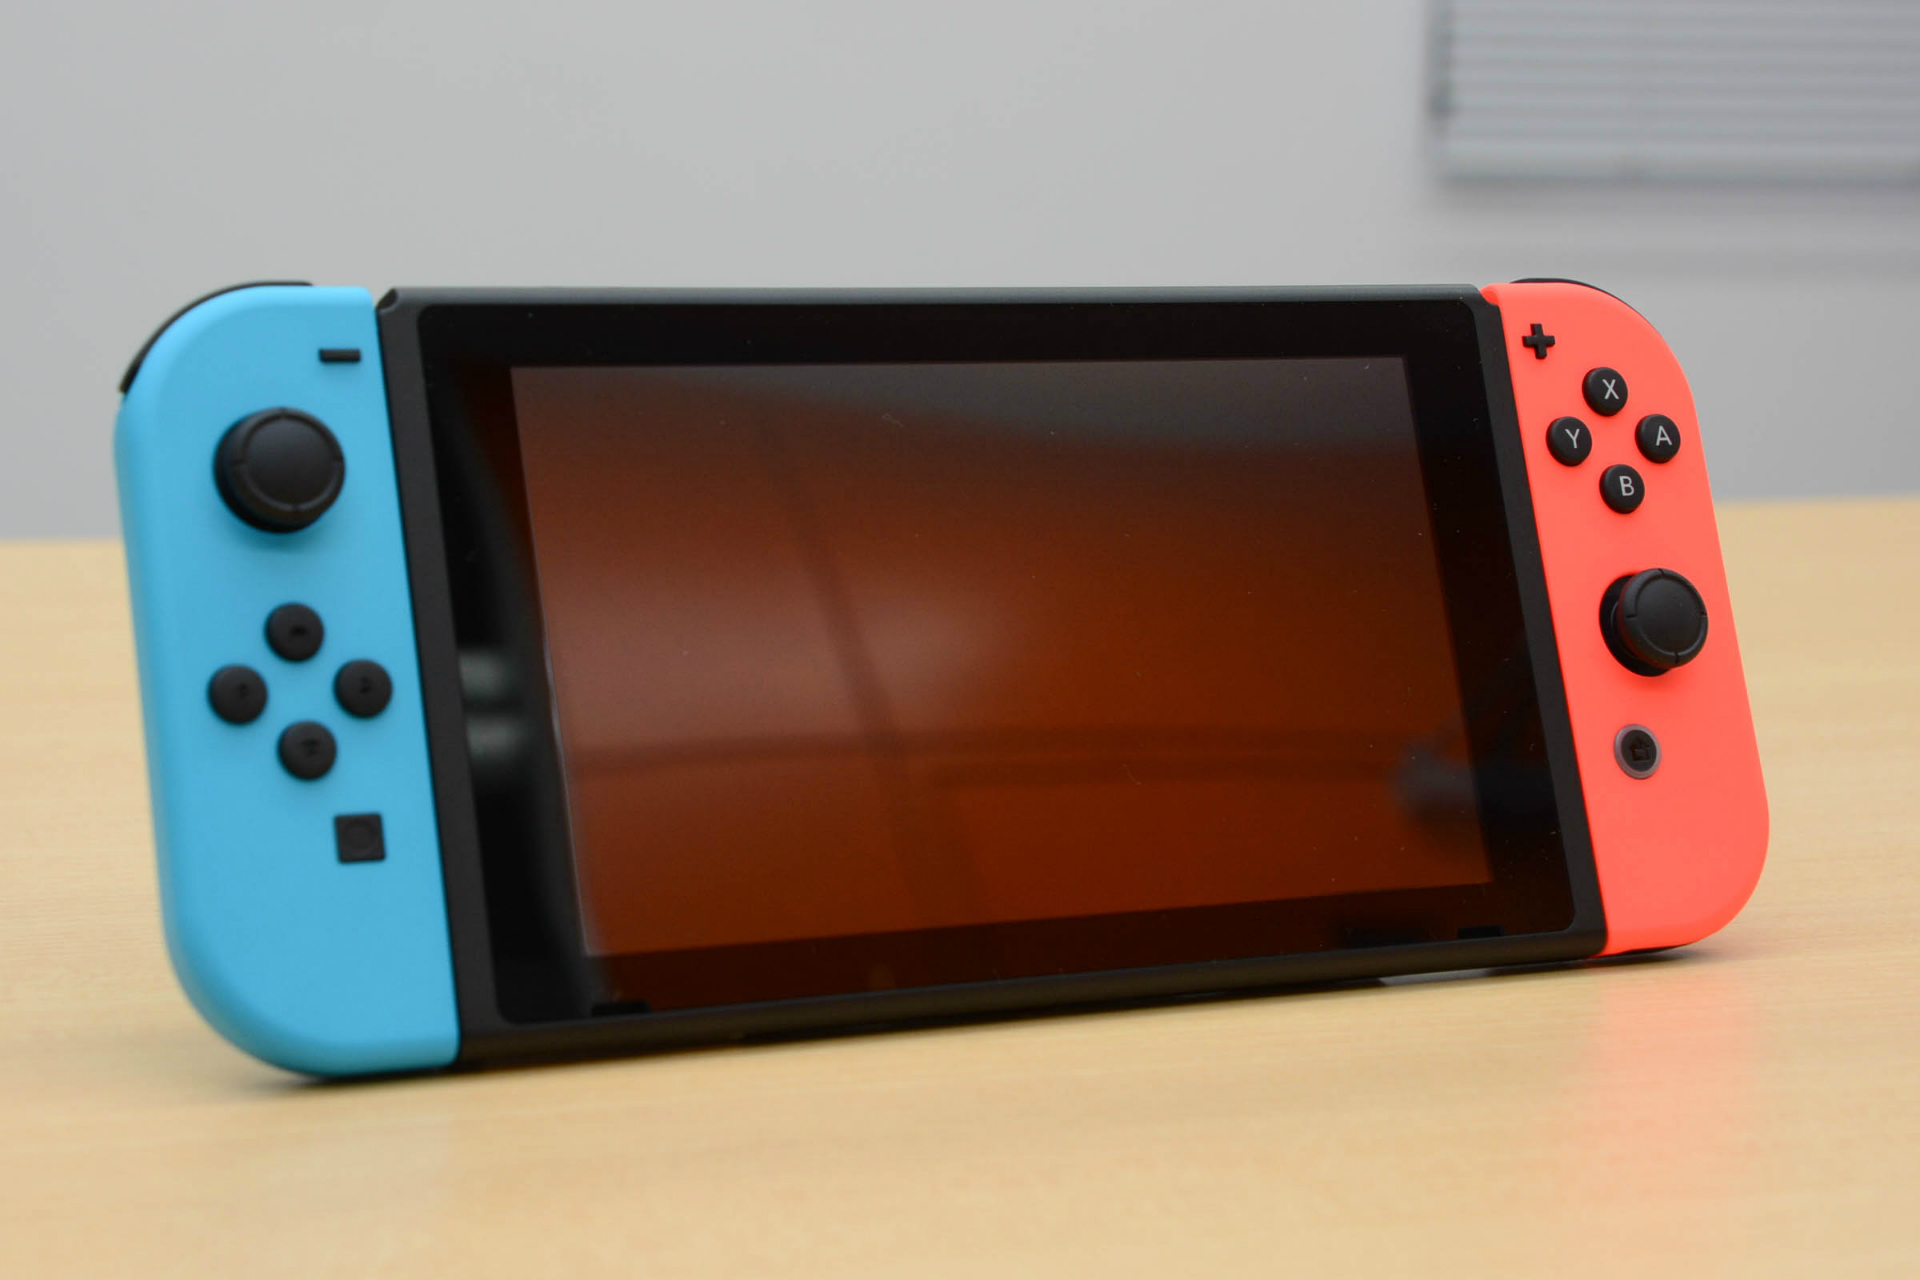 「Nintendo Switch」開封から初回セットアップまでの流れを写真付きで紹介